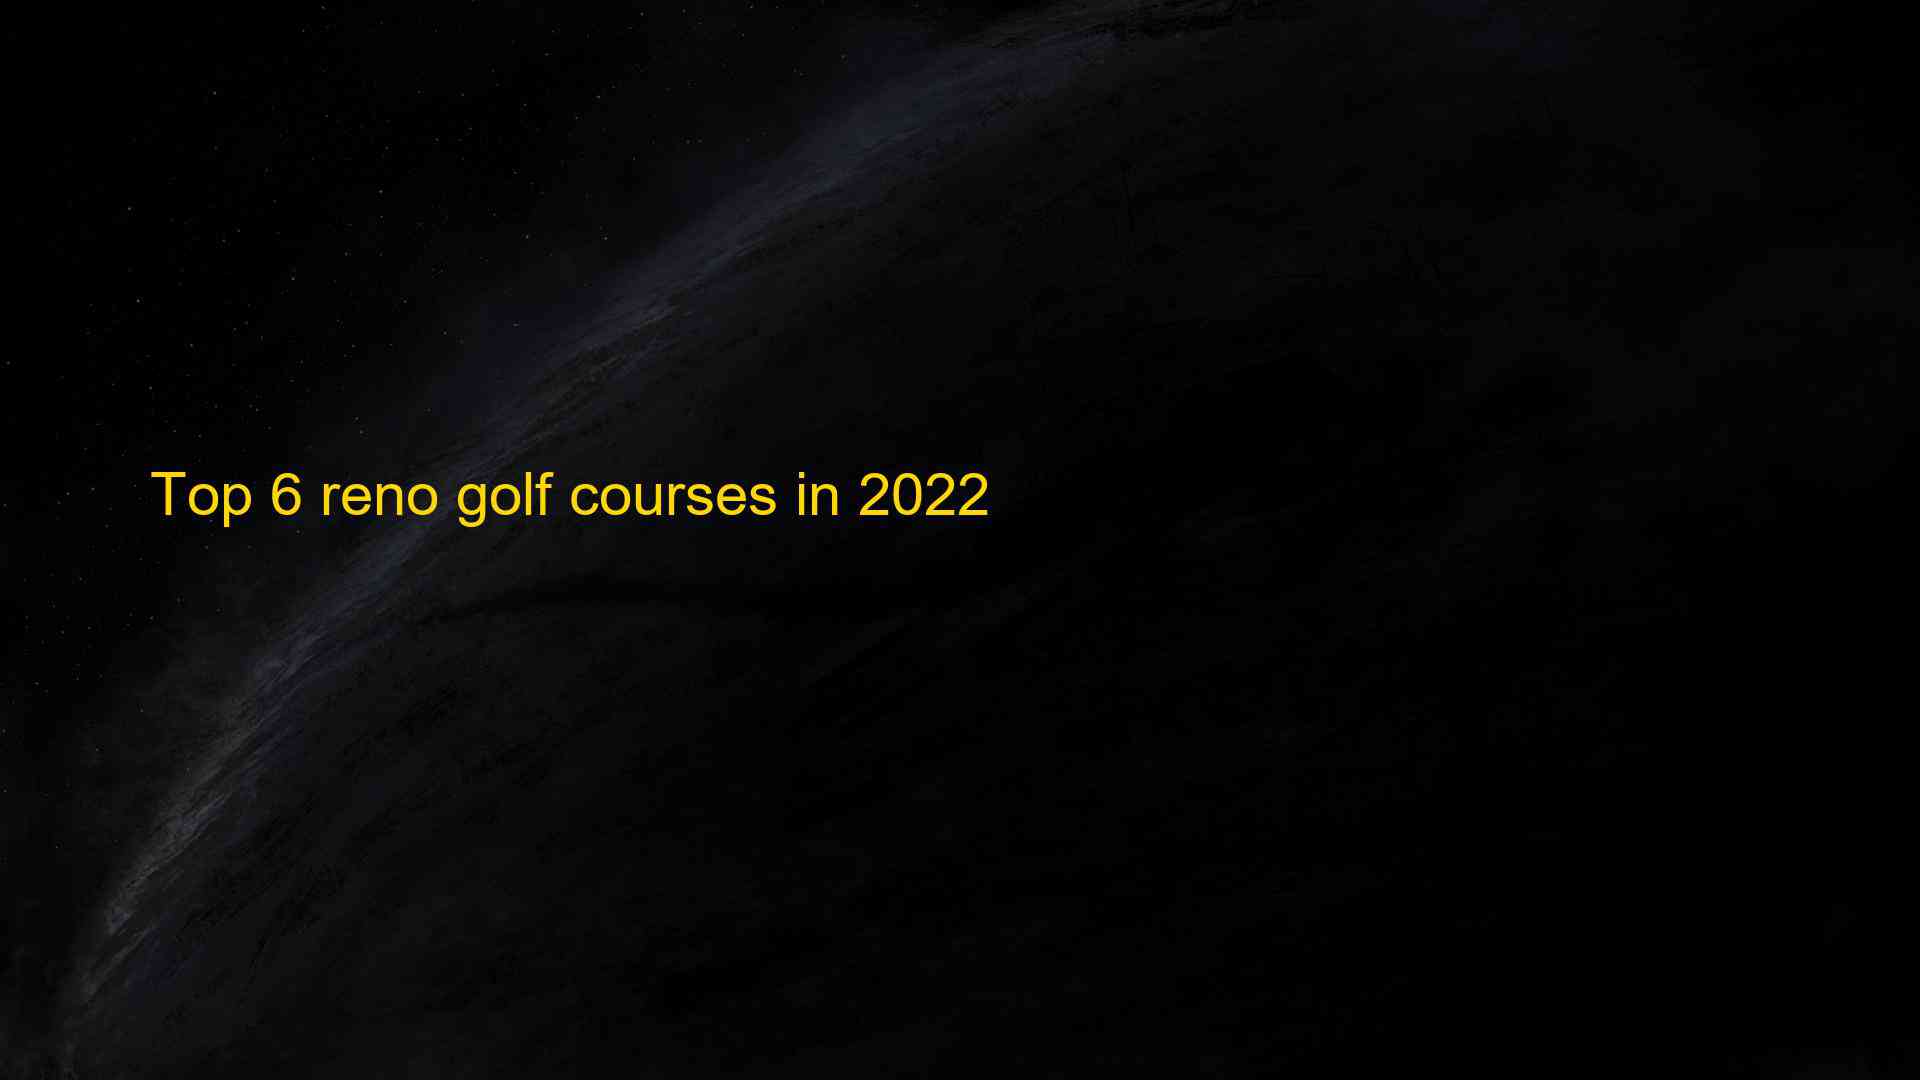 Top 6 reno golf courses in 2022 1660713131